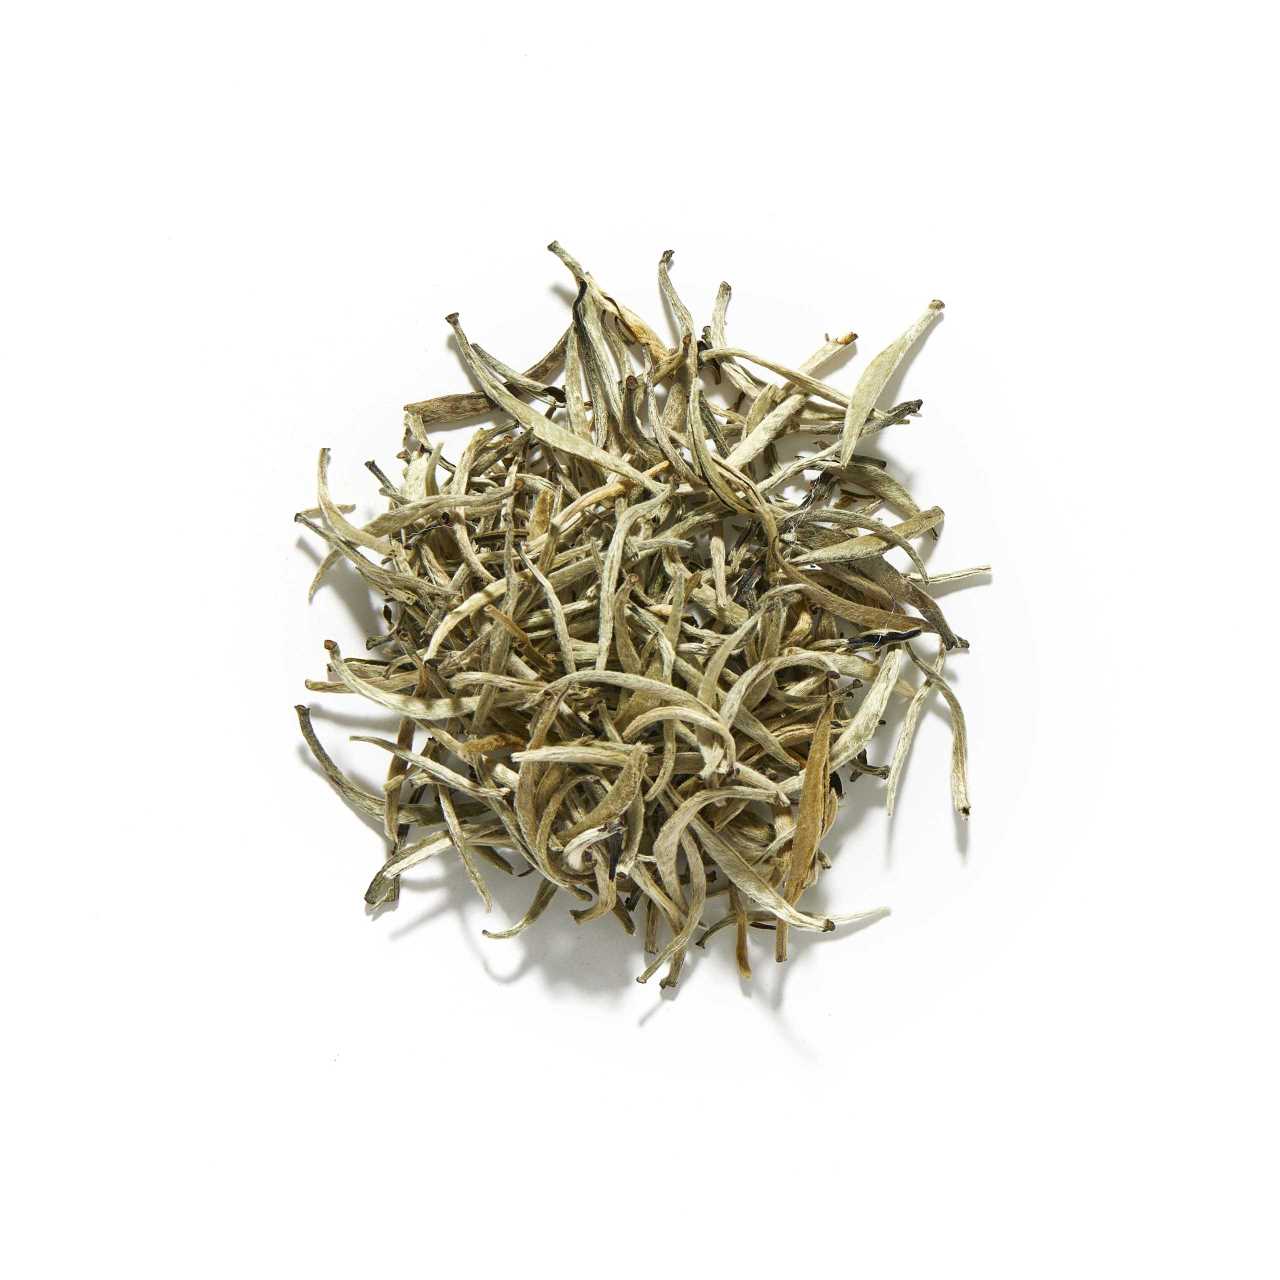 Rare Ceylon Silver Tips Loose Leaf Tea arranged in a circle